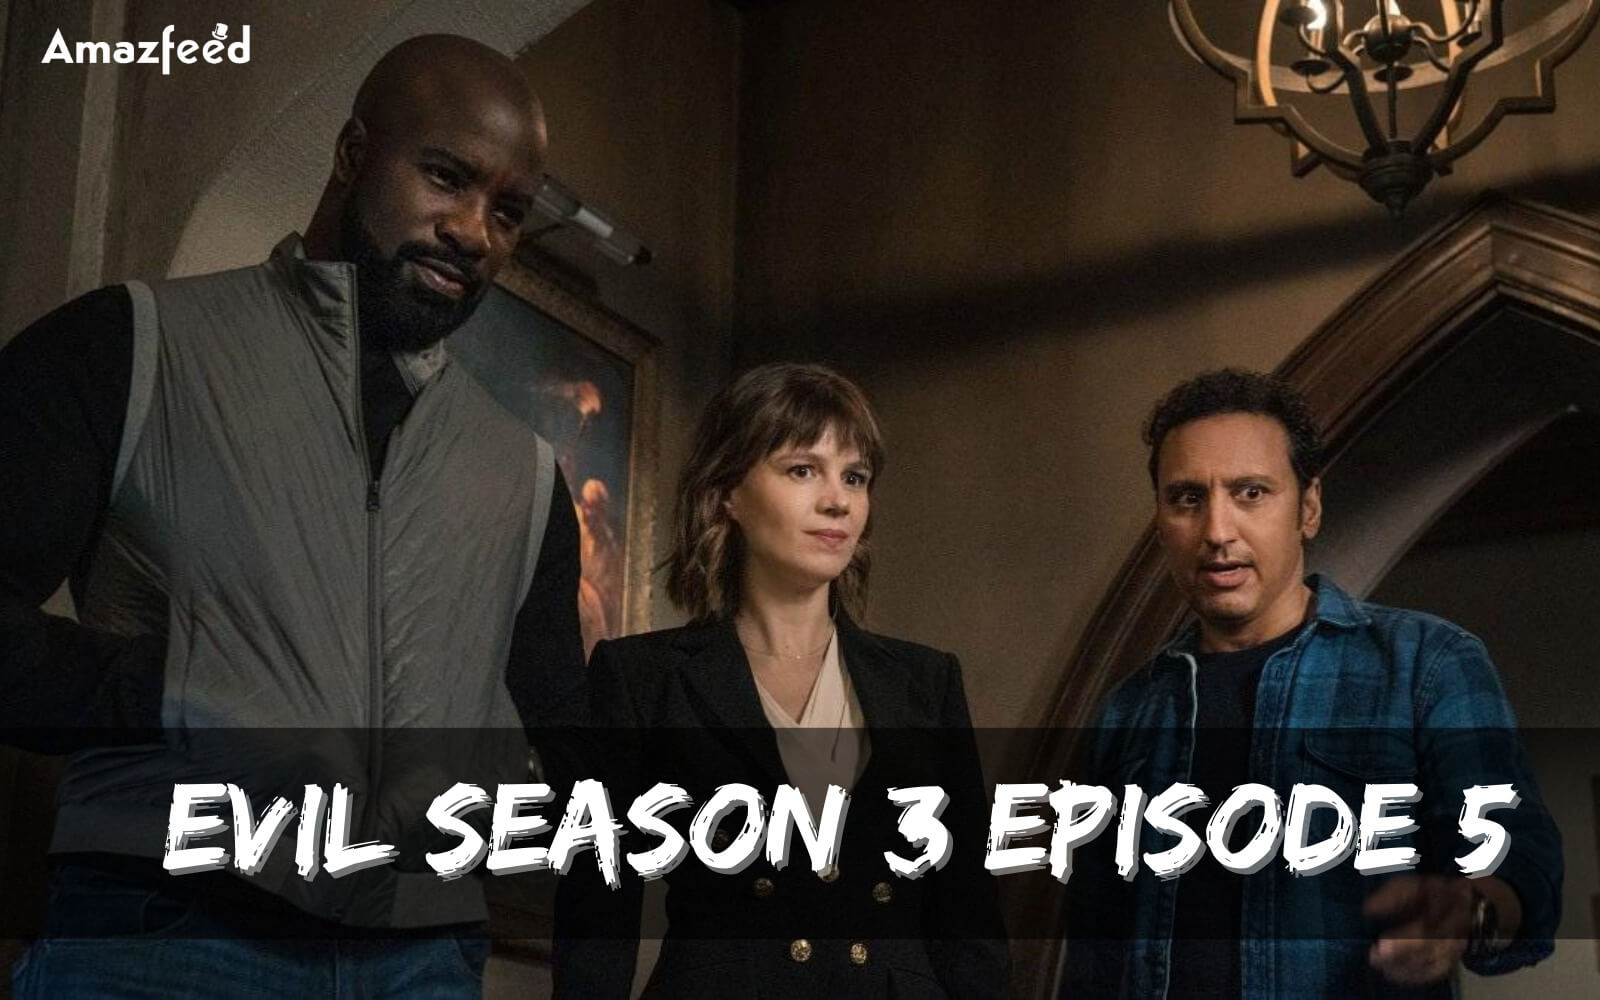 Evil Season 3 Episode 5 release date